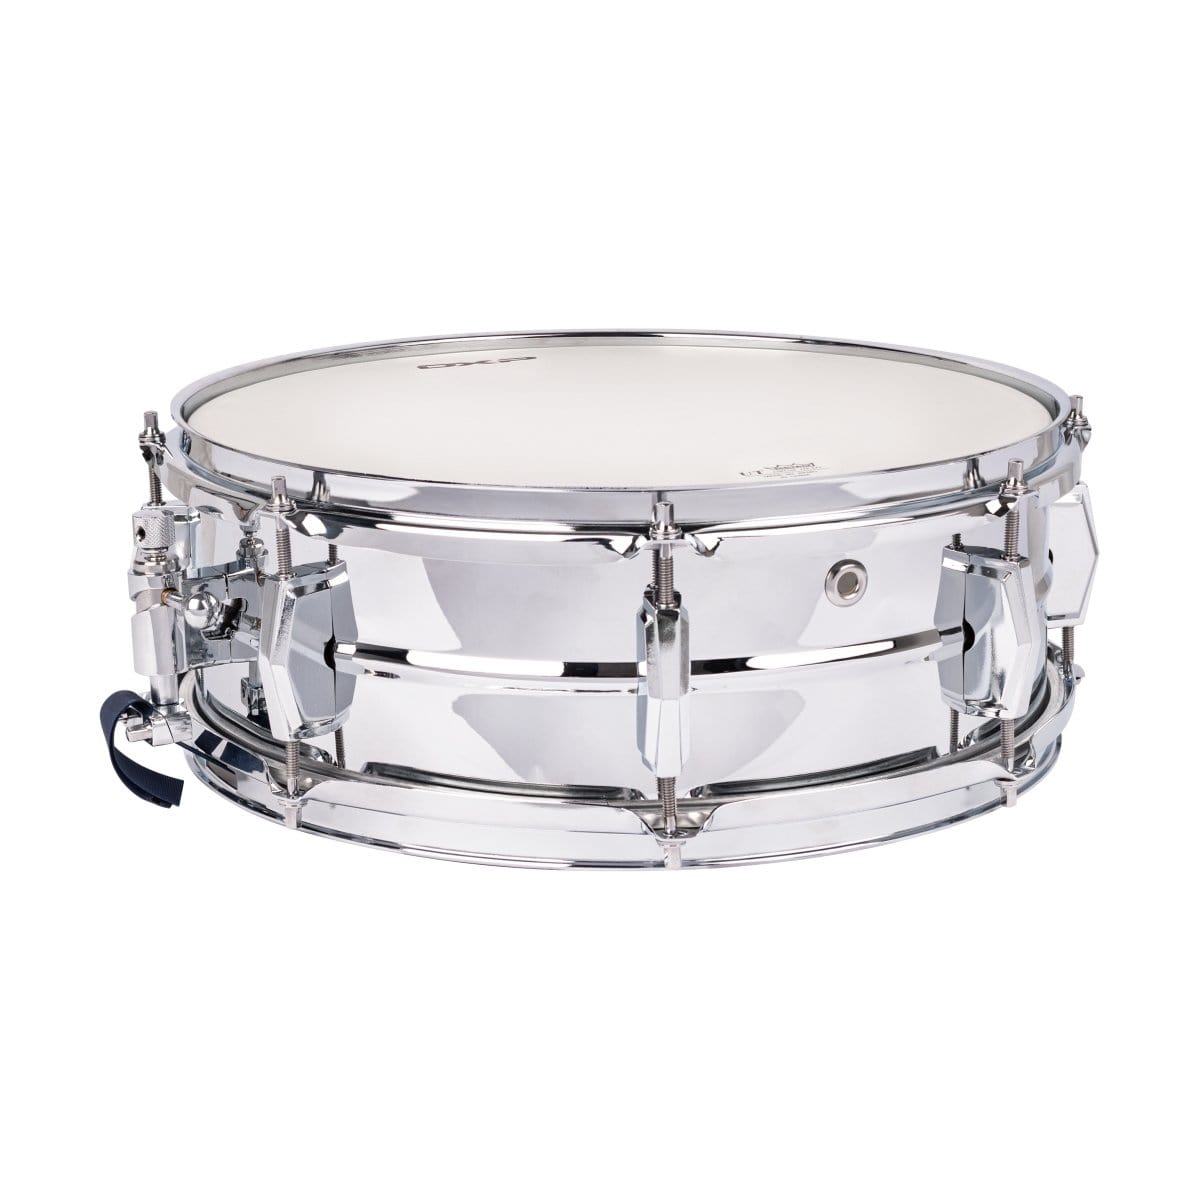 DXP Percussion DXP Snare Drum Steel Shell 14 X 5 Inch DXP1450S - Byron Music